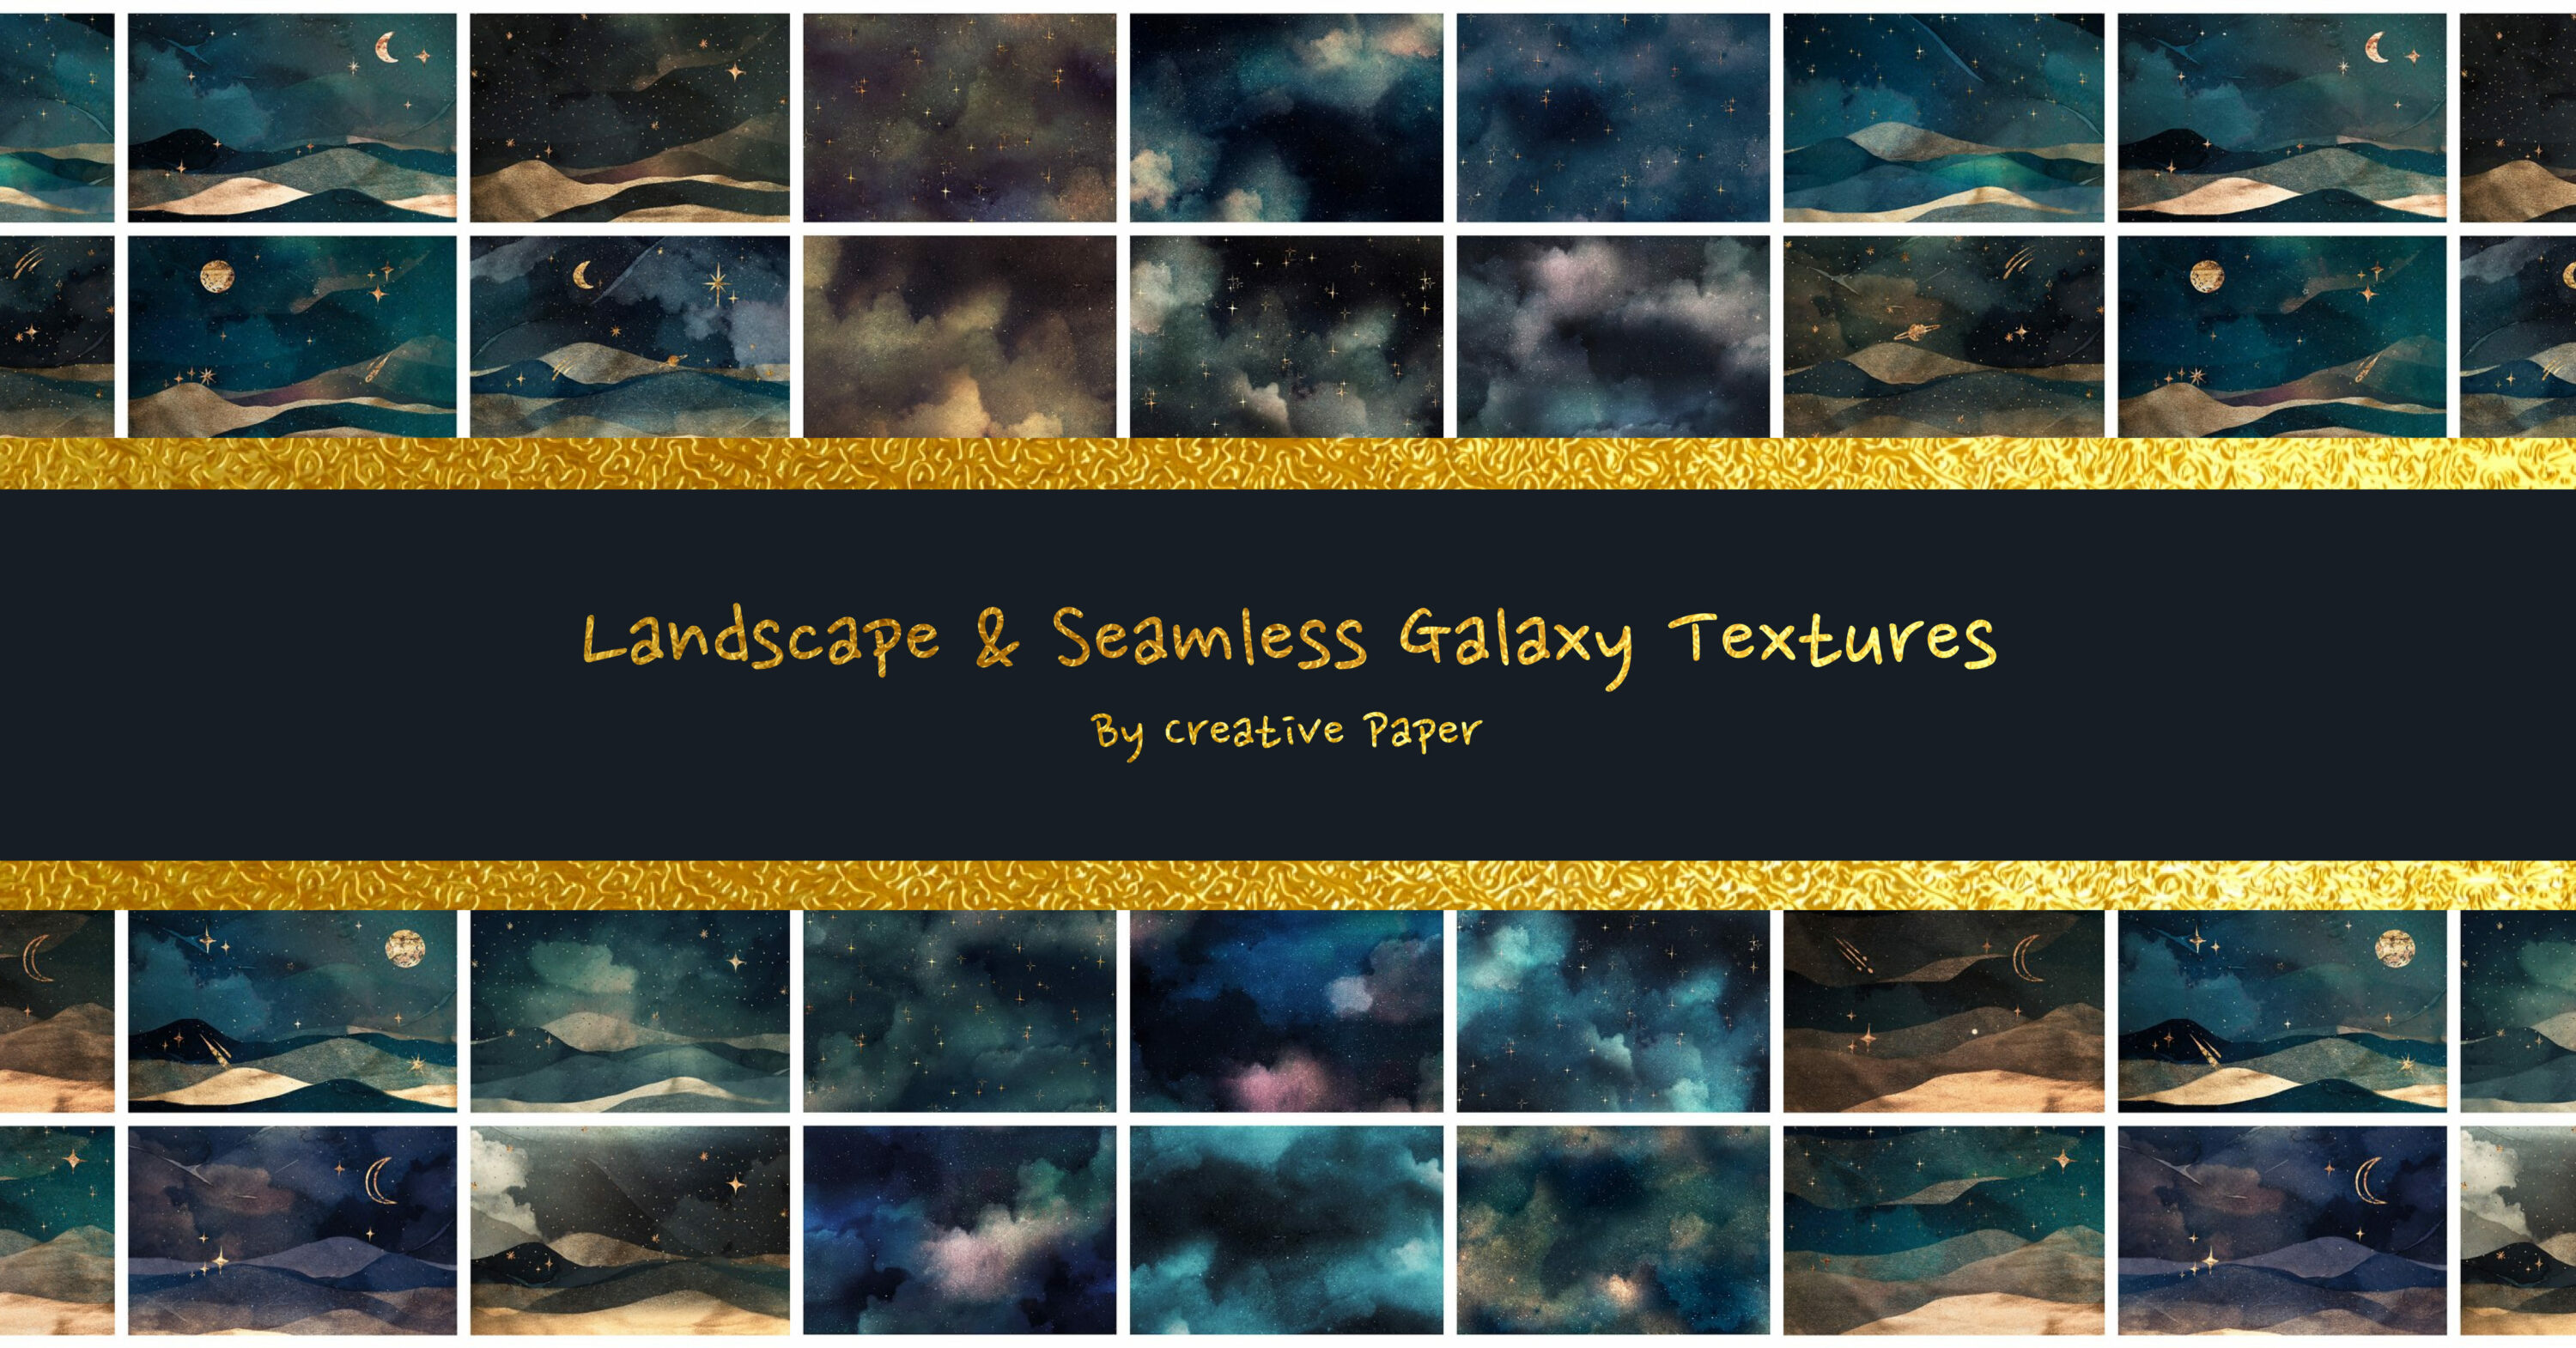 Landscape & Seamless Galaxy Textures facebook image.